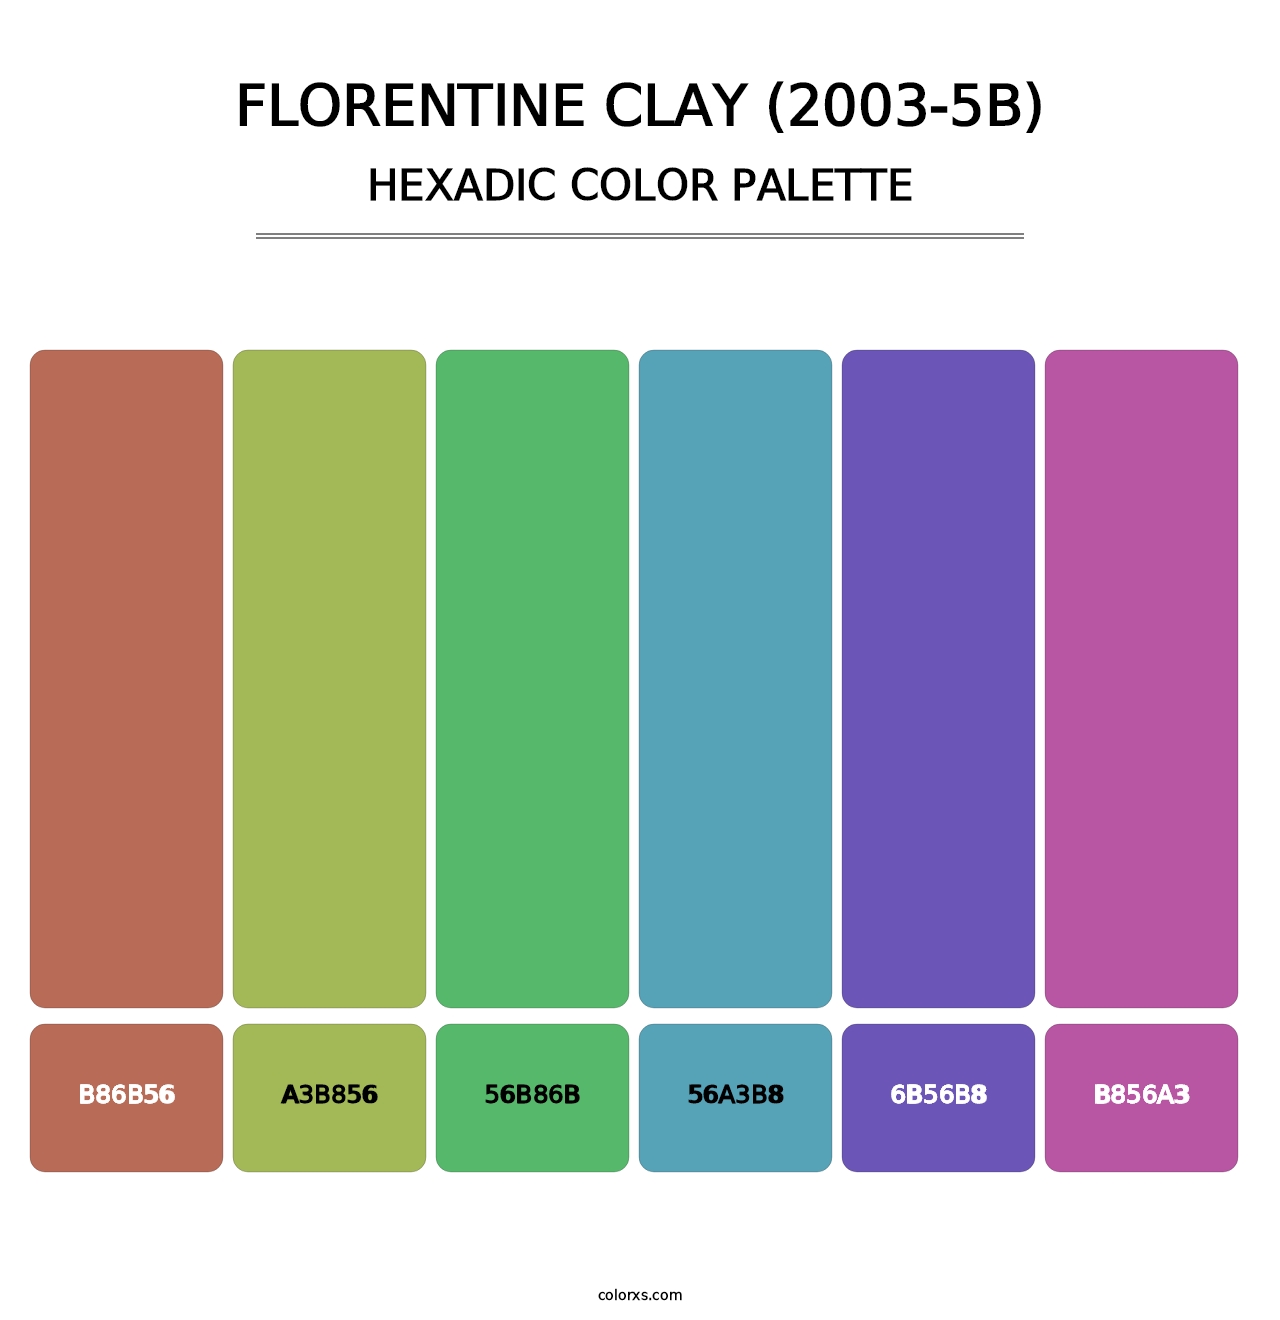 Florentine Clay (2003-5B) - Hexadic Color Palette